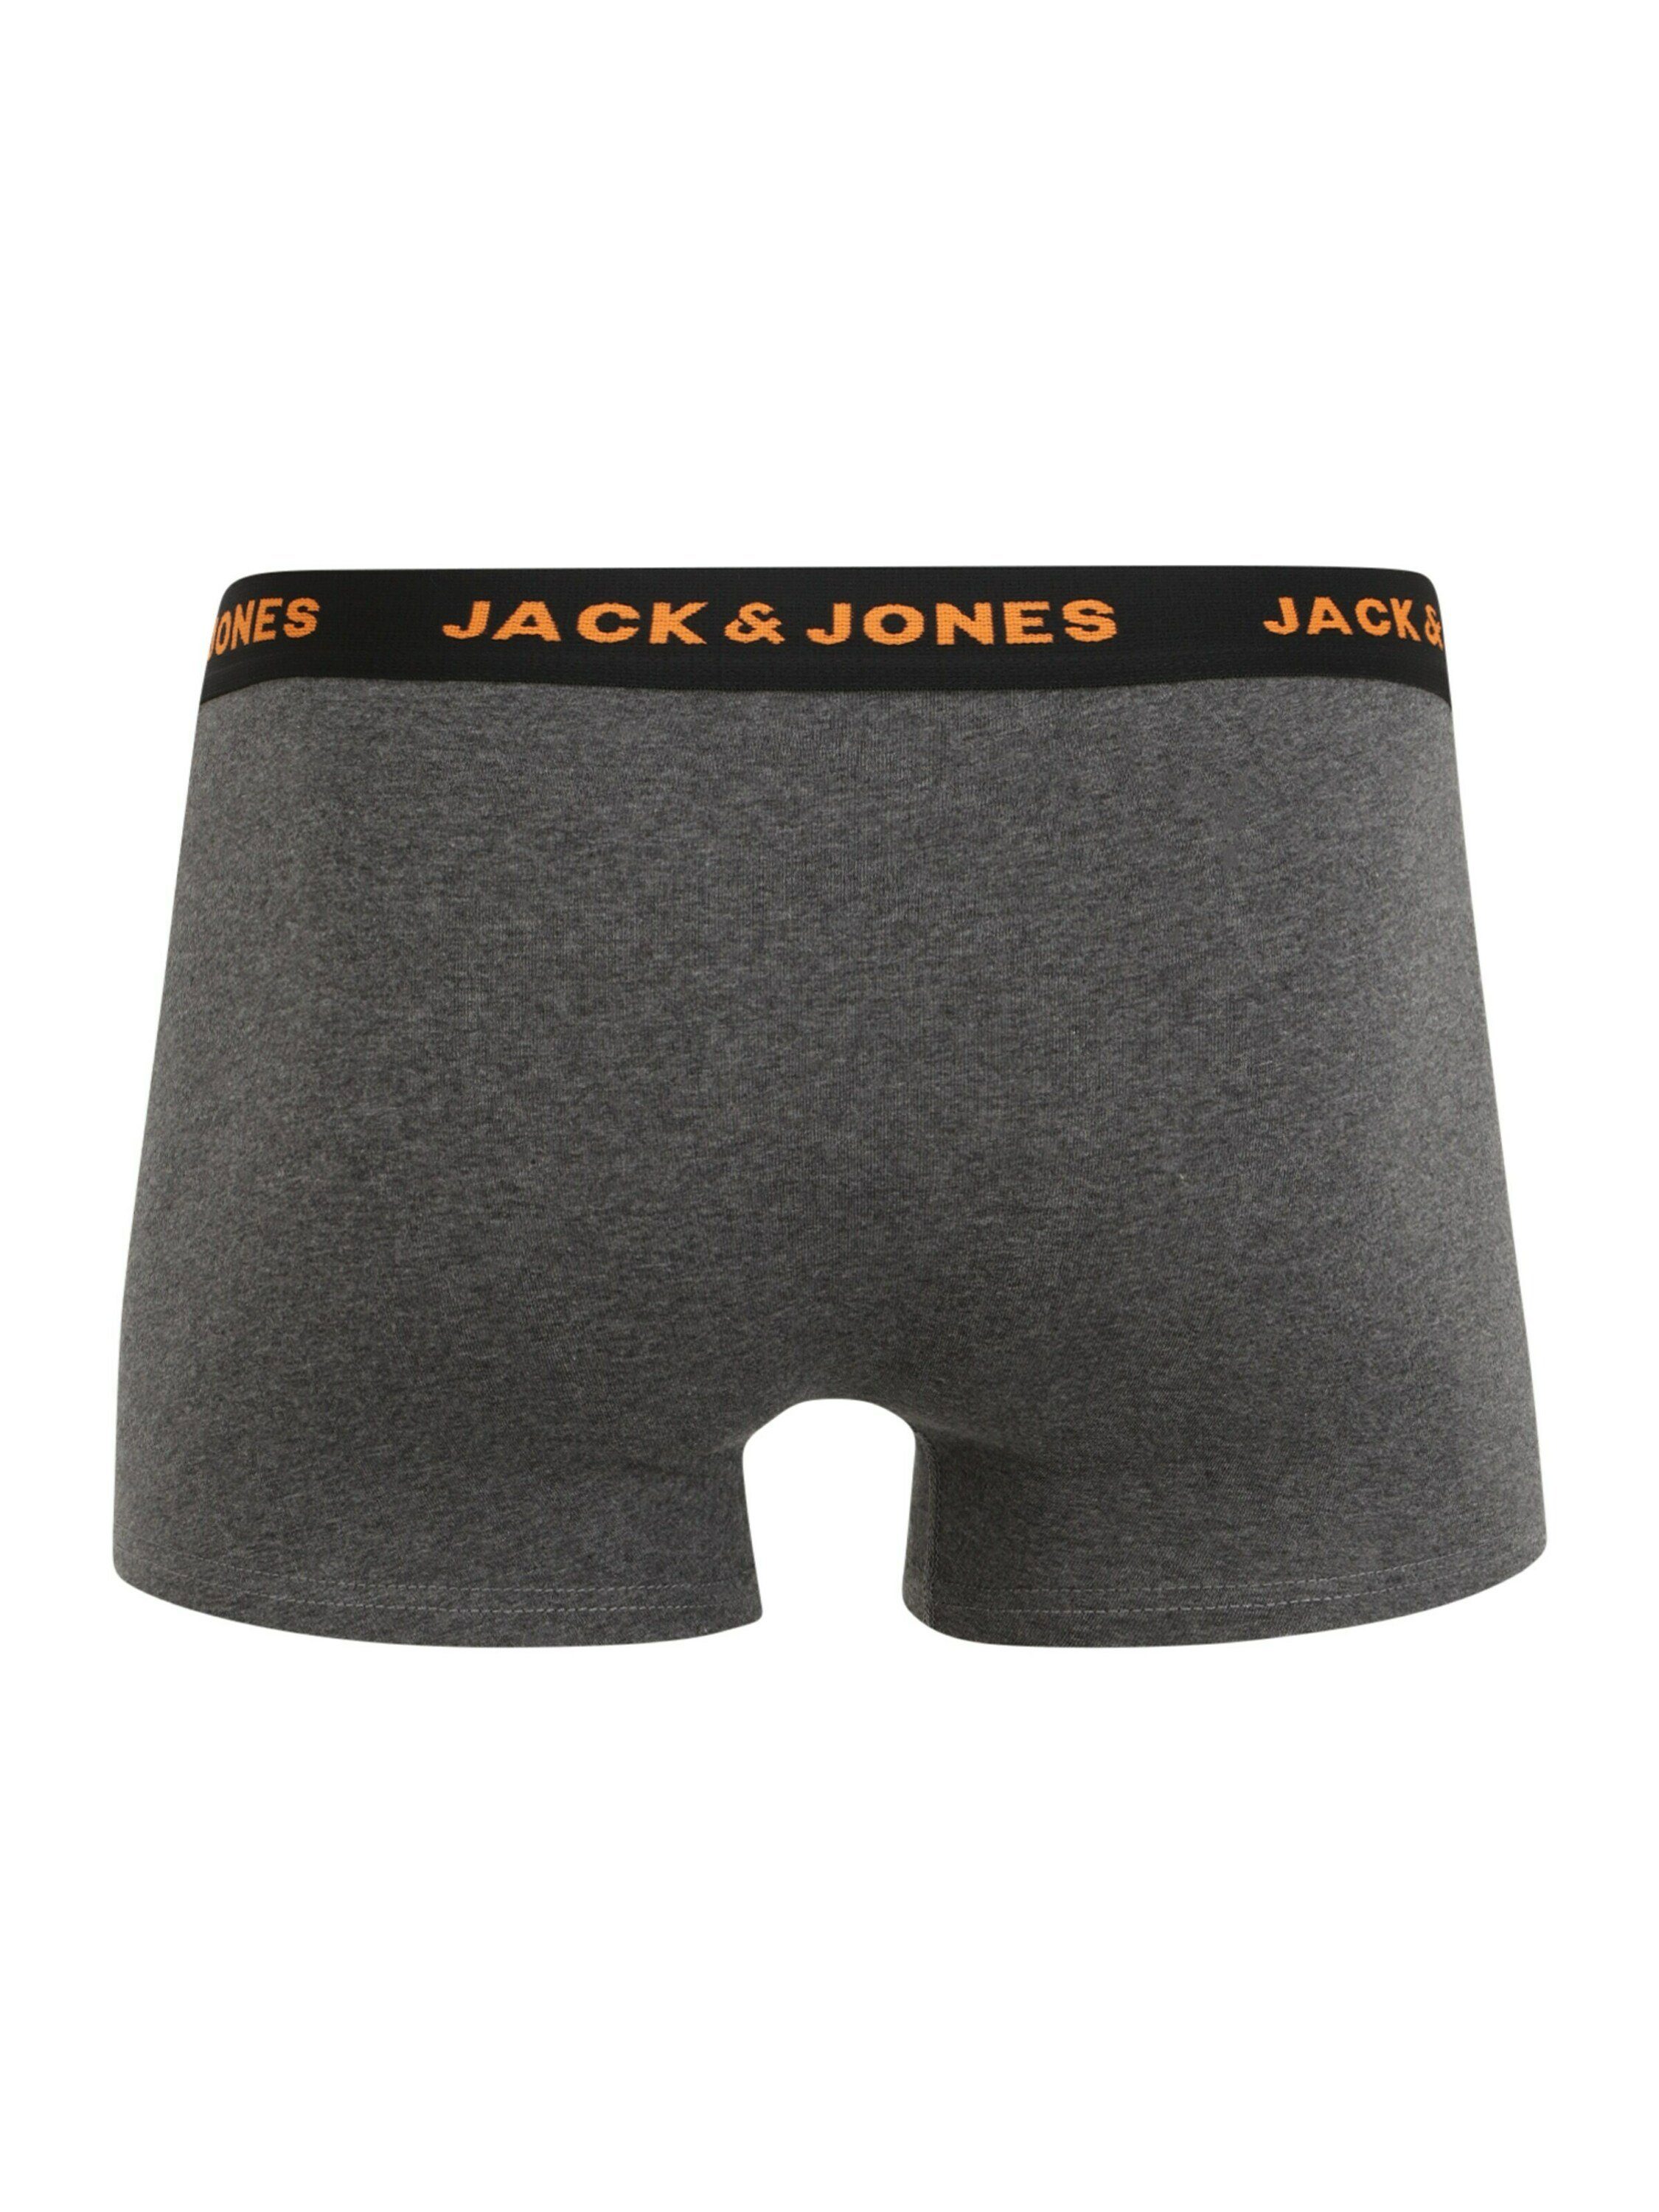 & Boxershorts Navy Black (5-St) Jones Jack